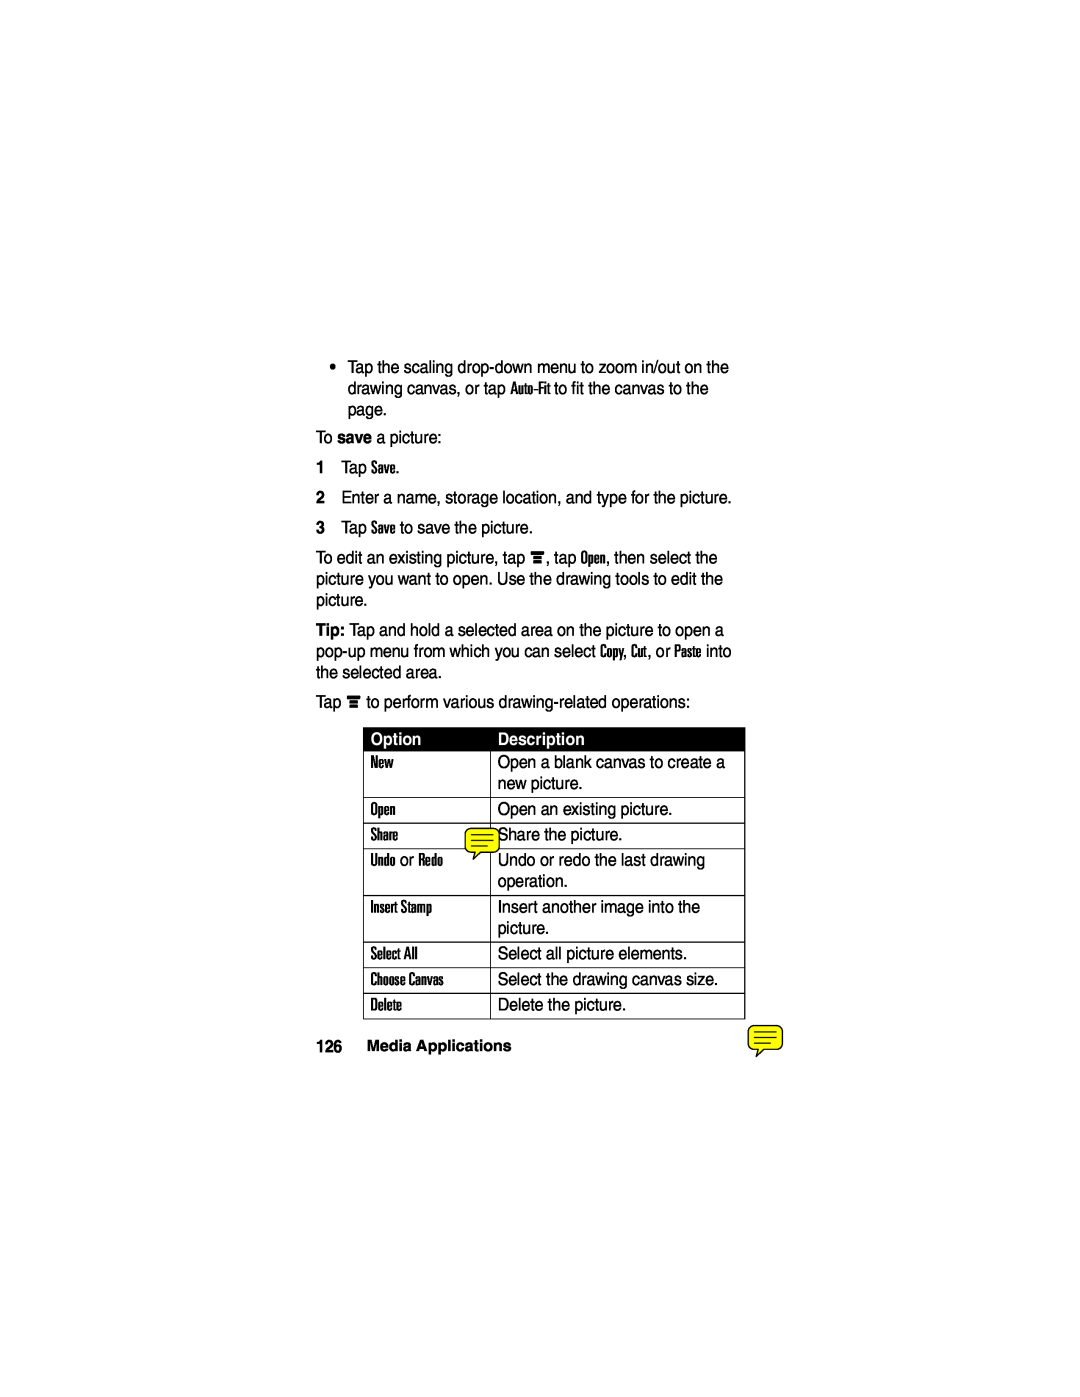 Motorola A780 manual To save a picture 1 Tap Save, Option, Description 